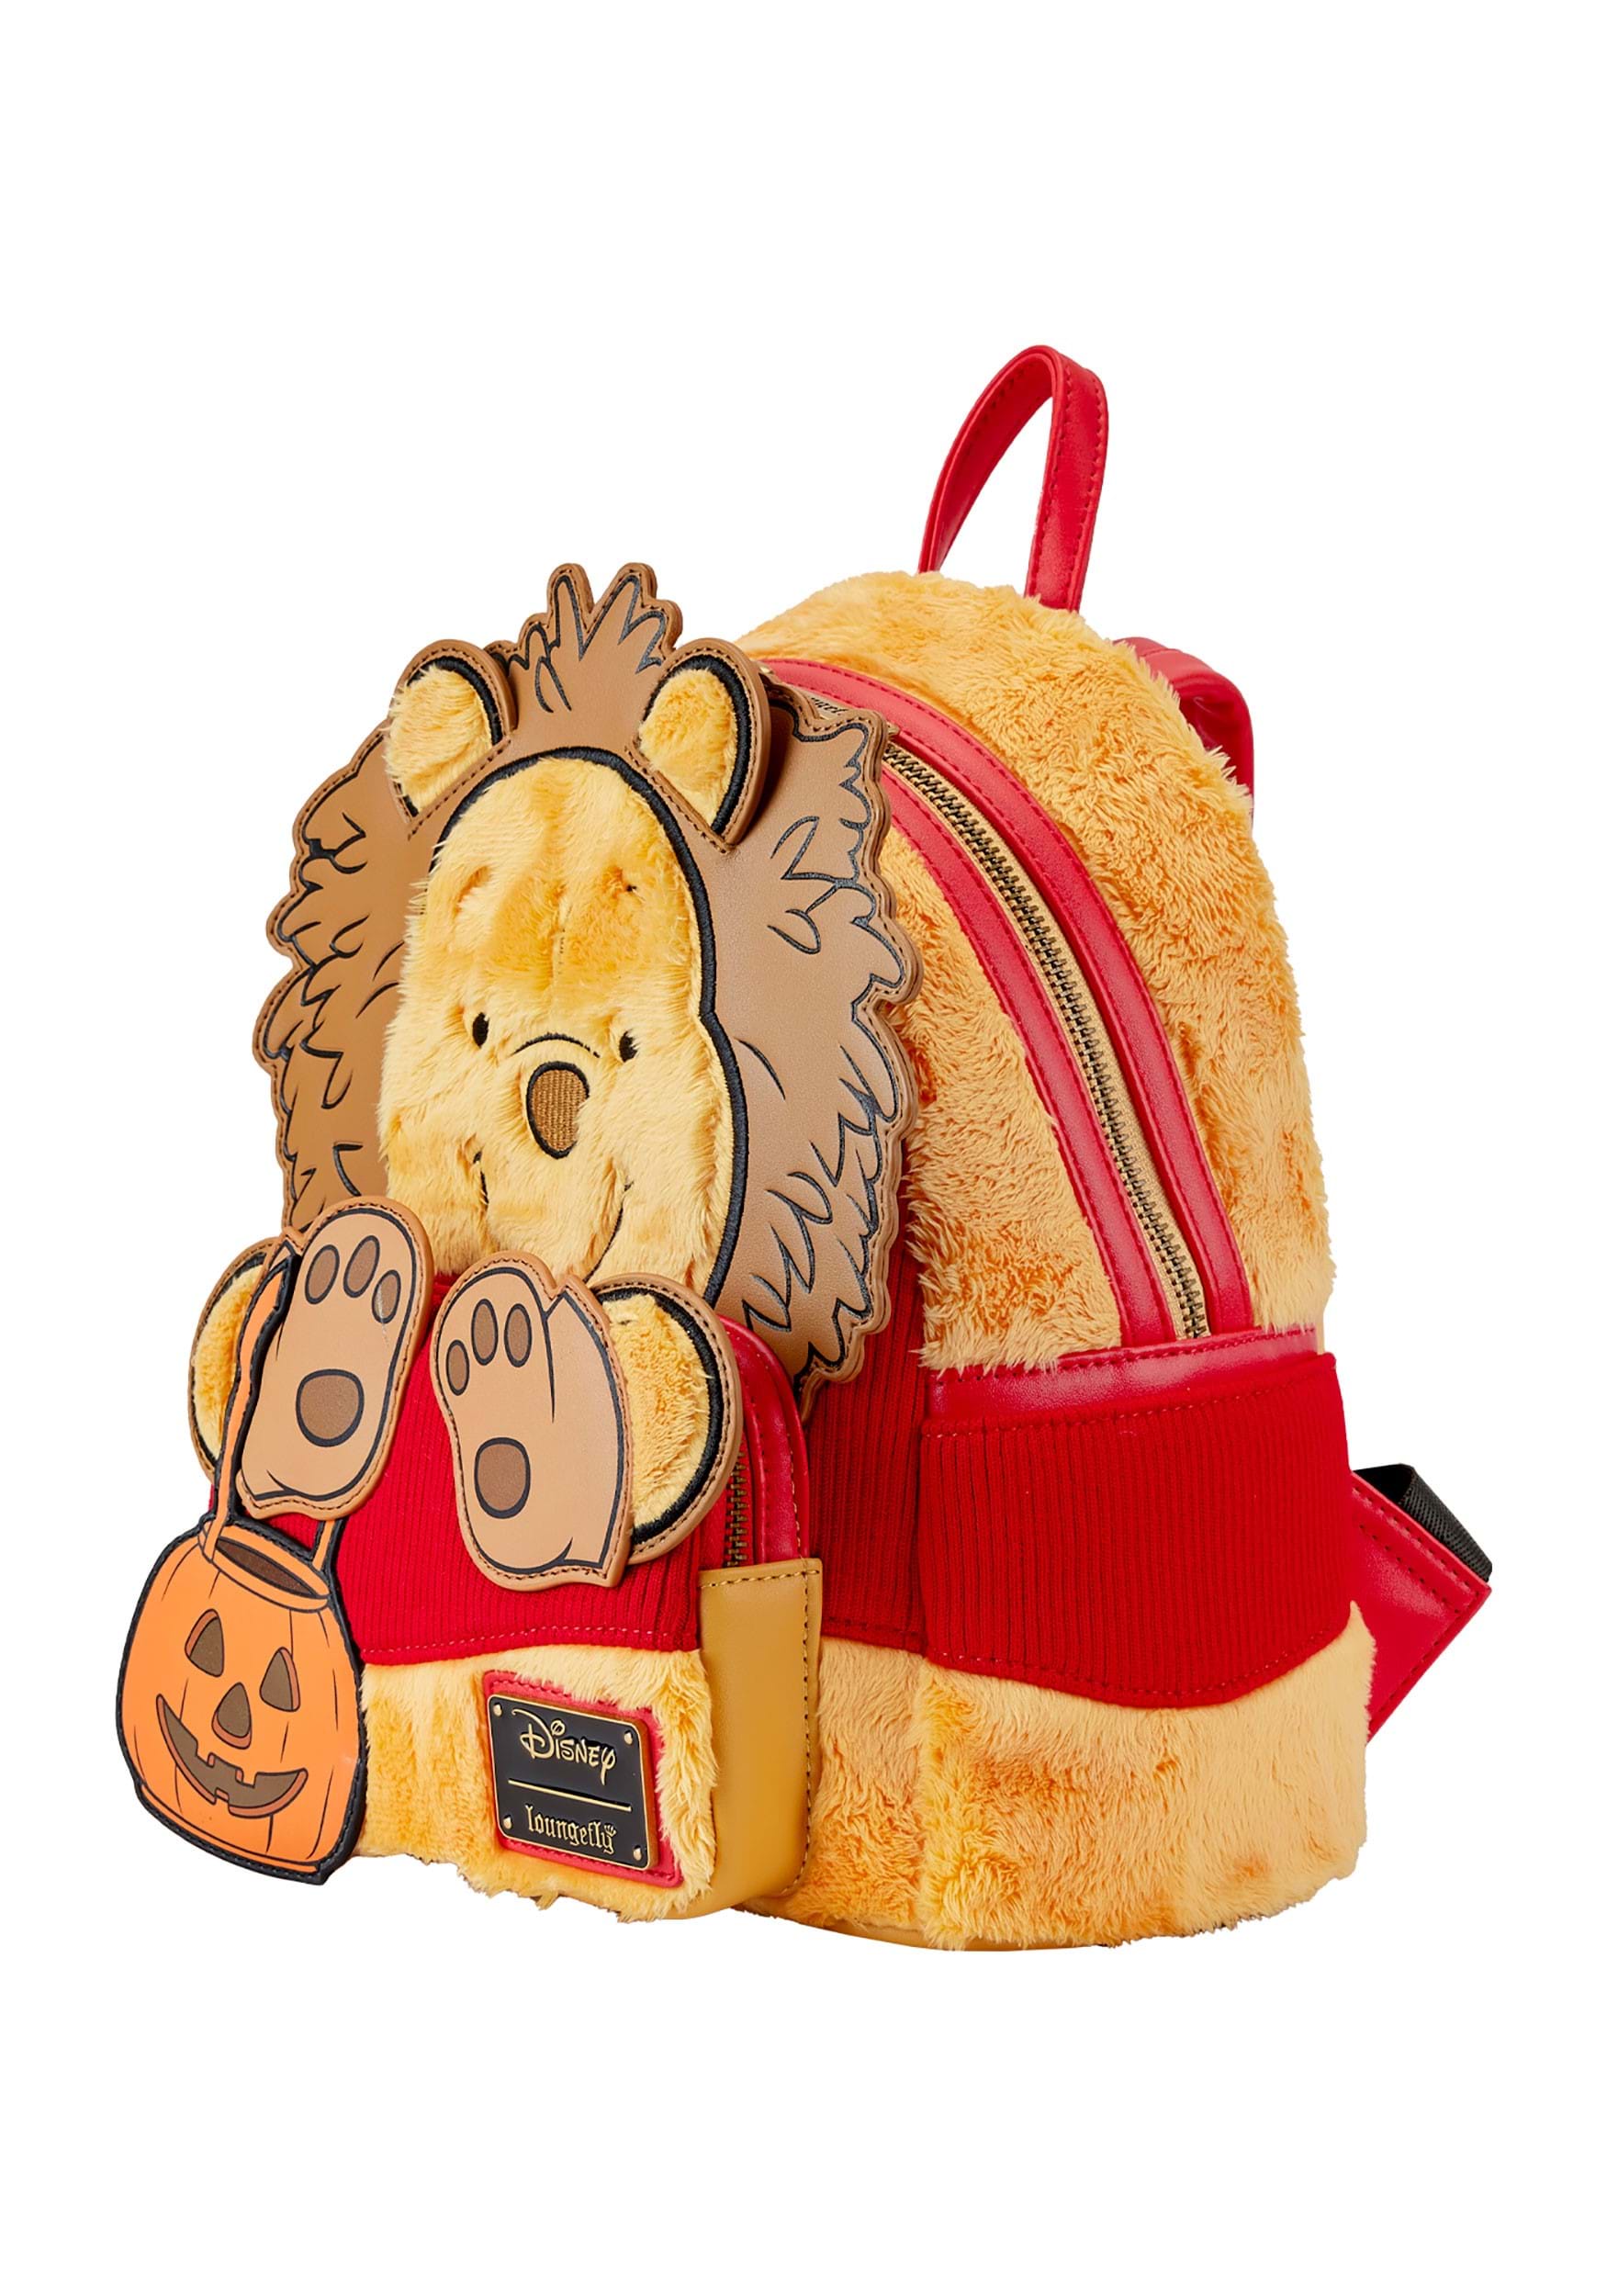 Winnie the Pooh Hunny Pot Costume Companion Bag - Plush, Bee-Embroidered,  Shoulder Bag